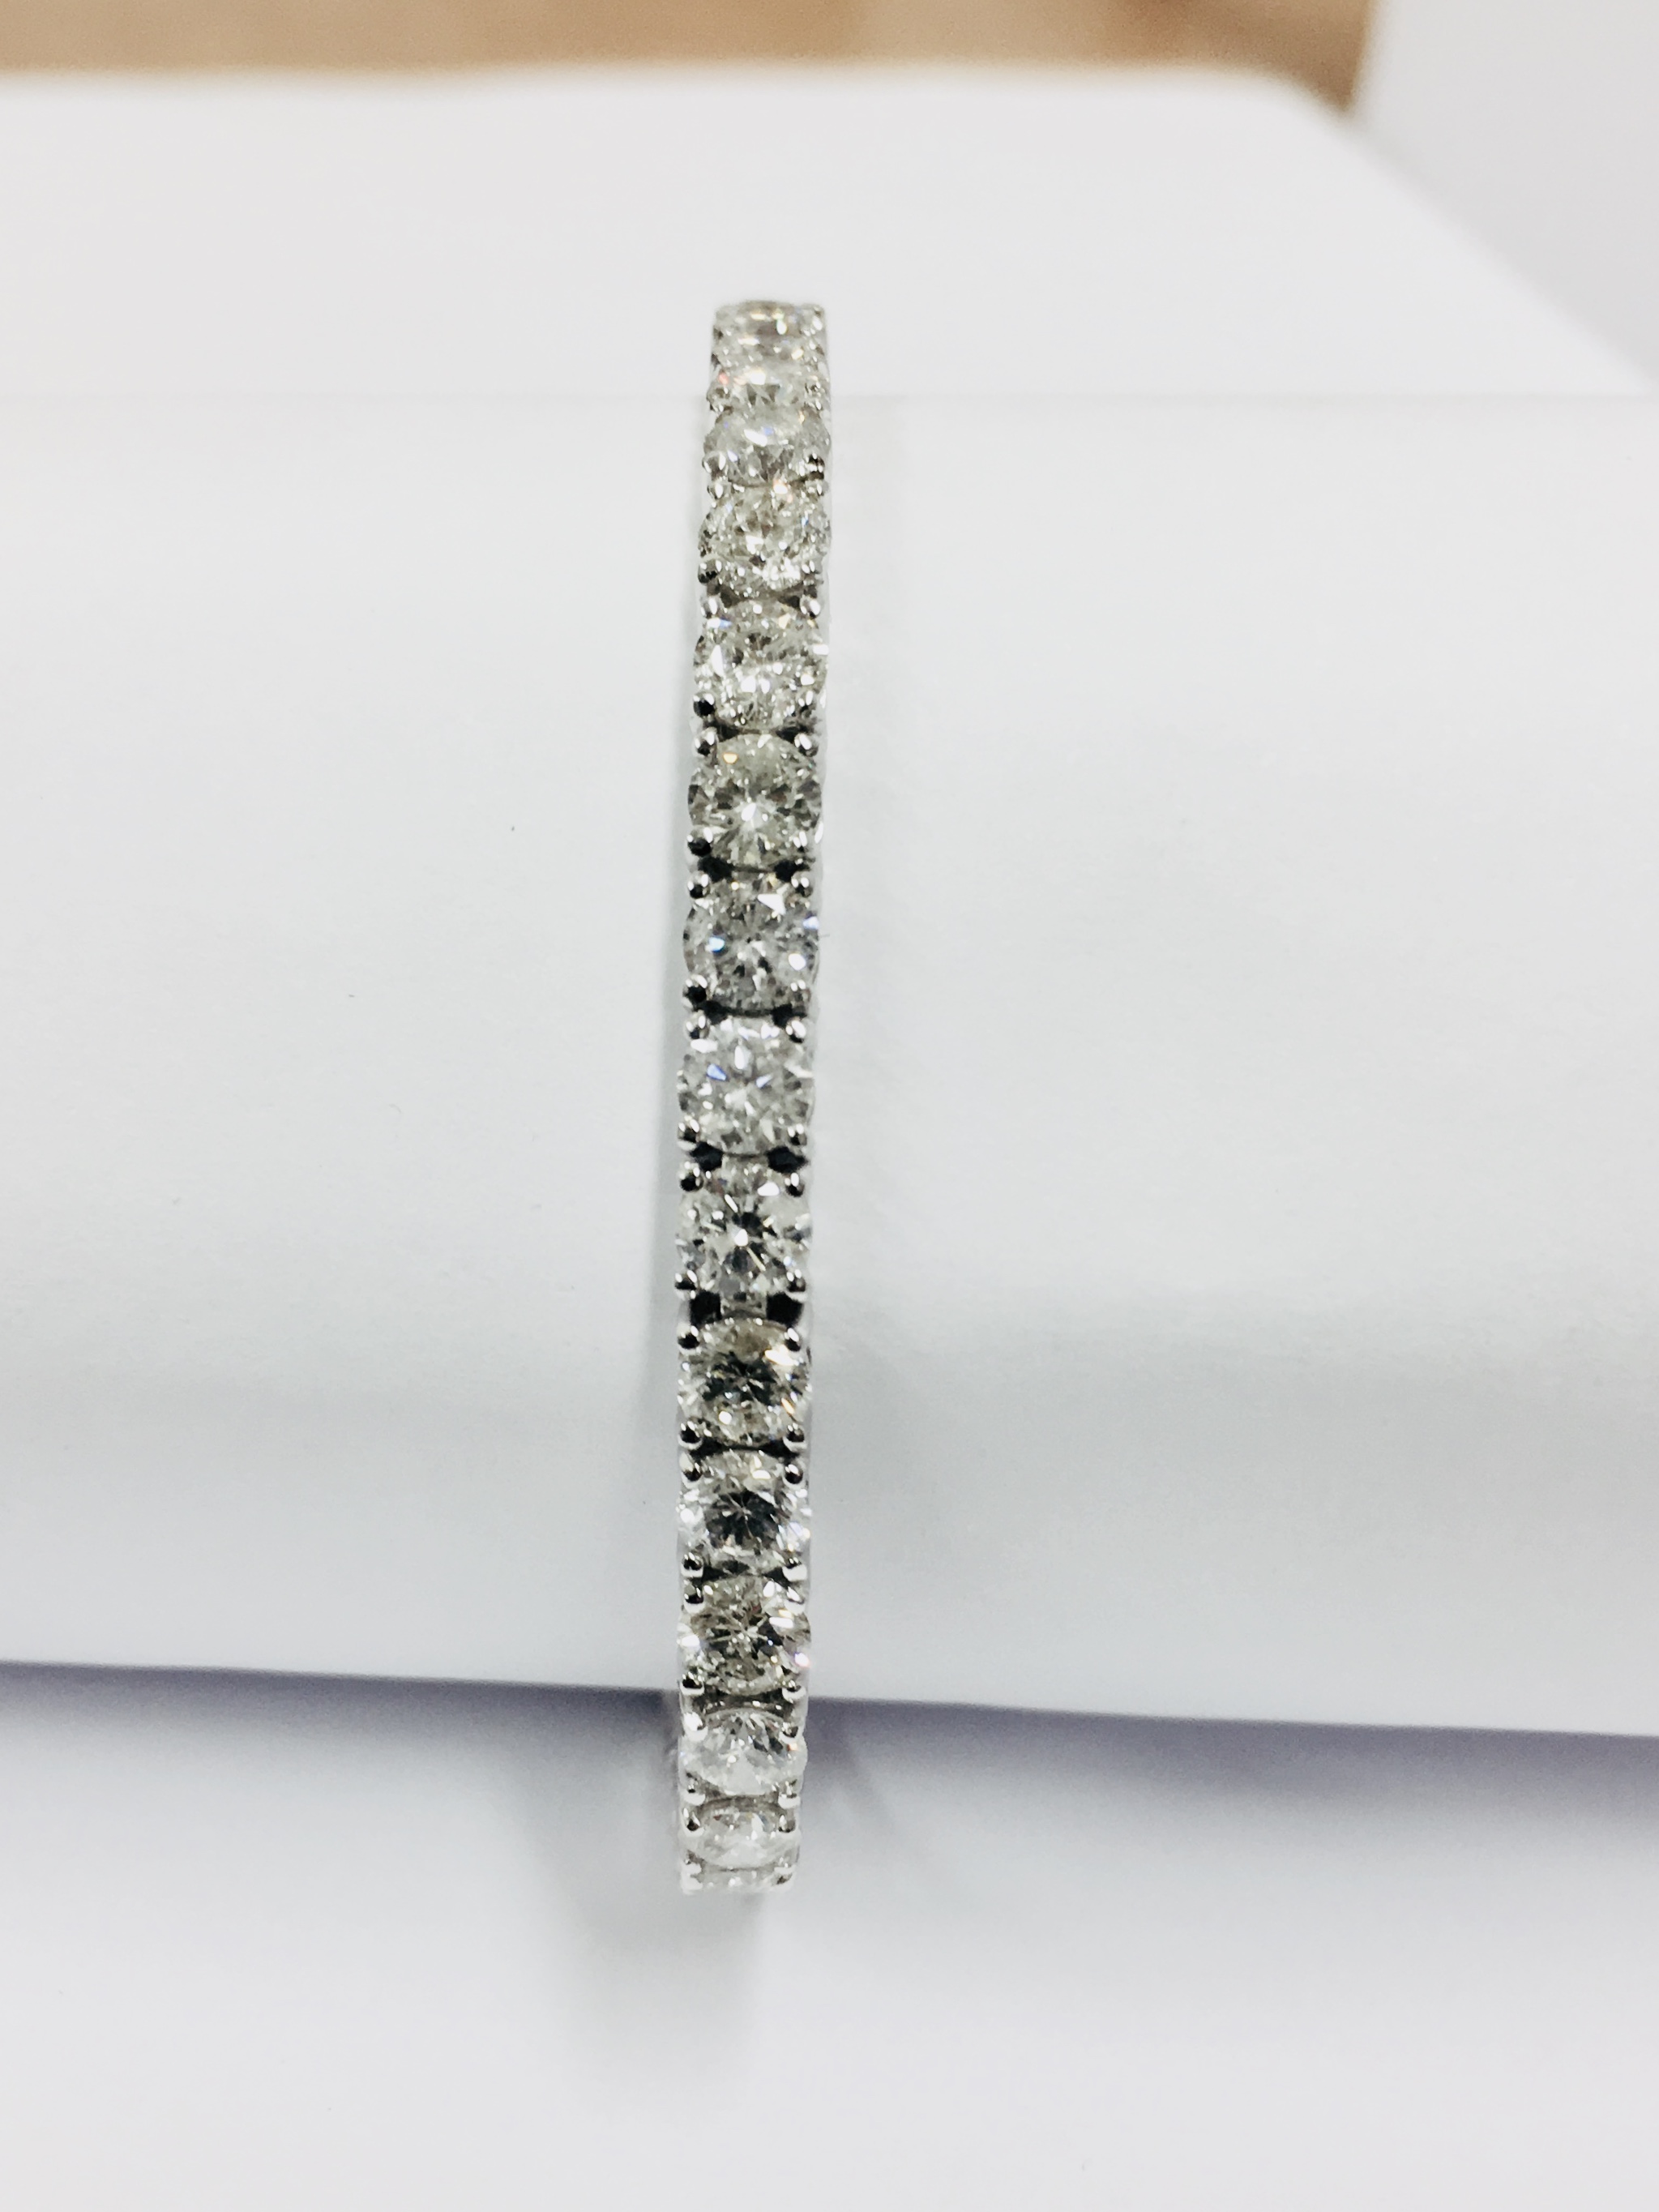 8.00ct Diamond tennis bracelet set with brilliant cut diamonds of G colour - Image 12 of 42